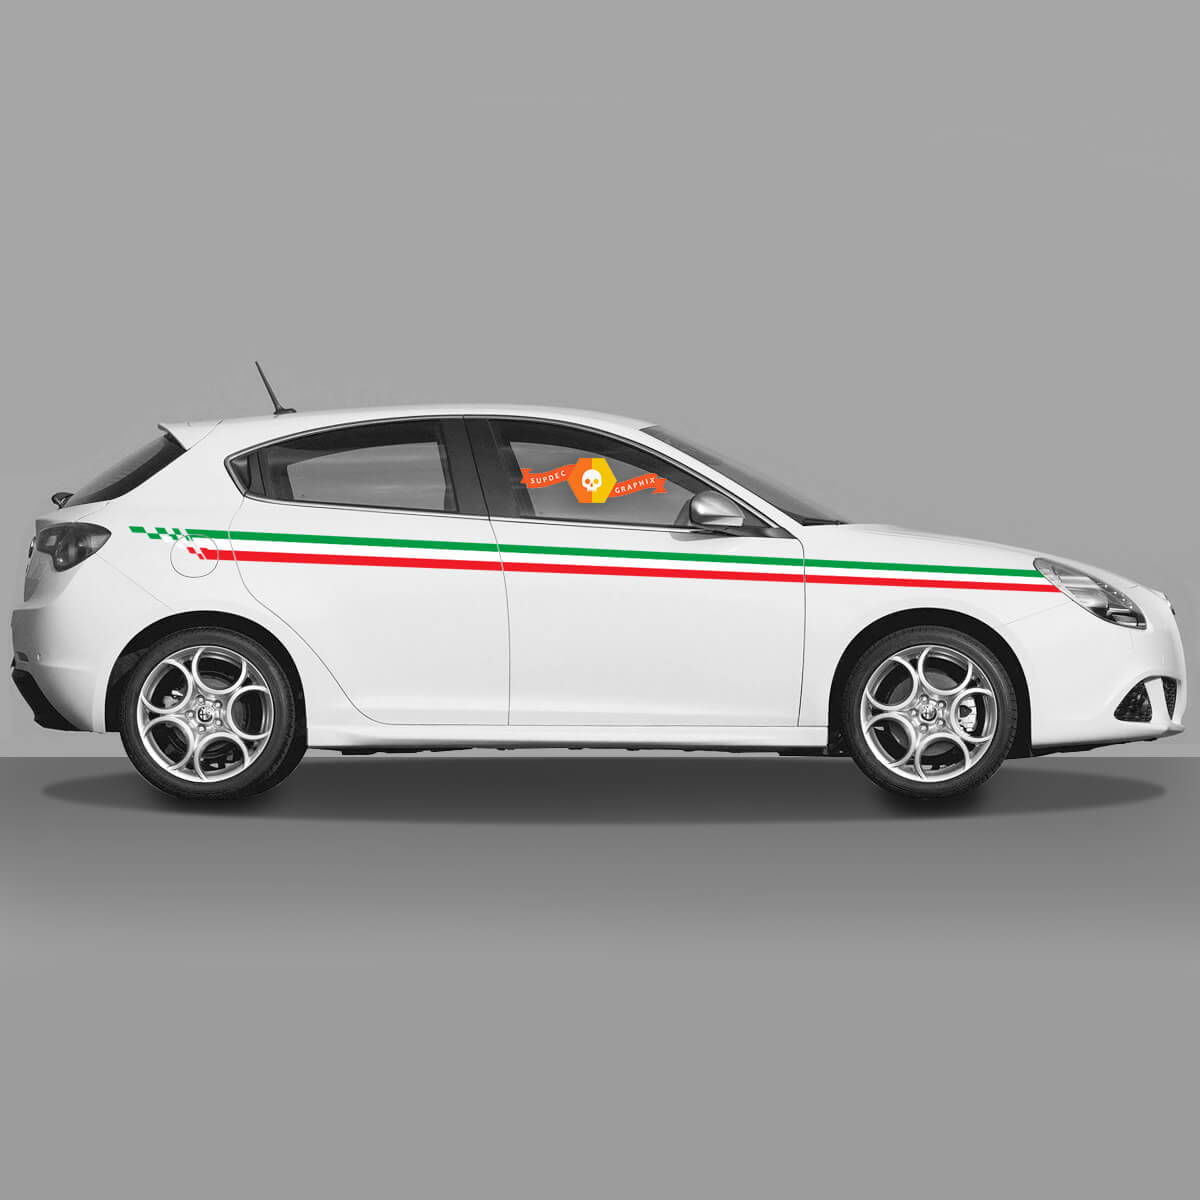 2x Default Italian Flag Colors Doors Body Decal fits Alfa Romeo Giulietta decals Stripe Vinyl Graphics